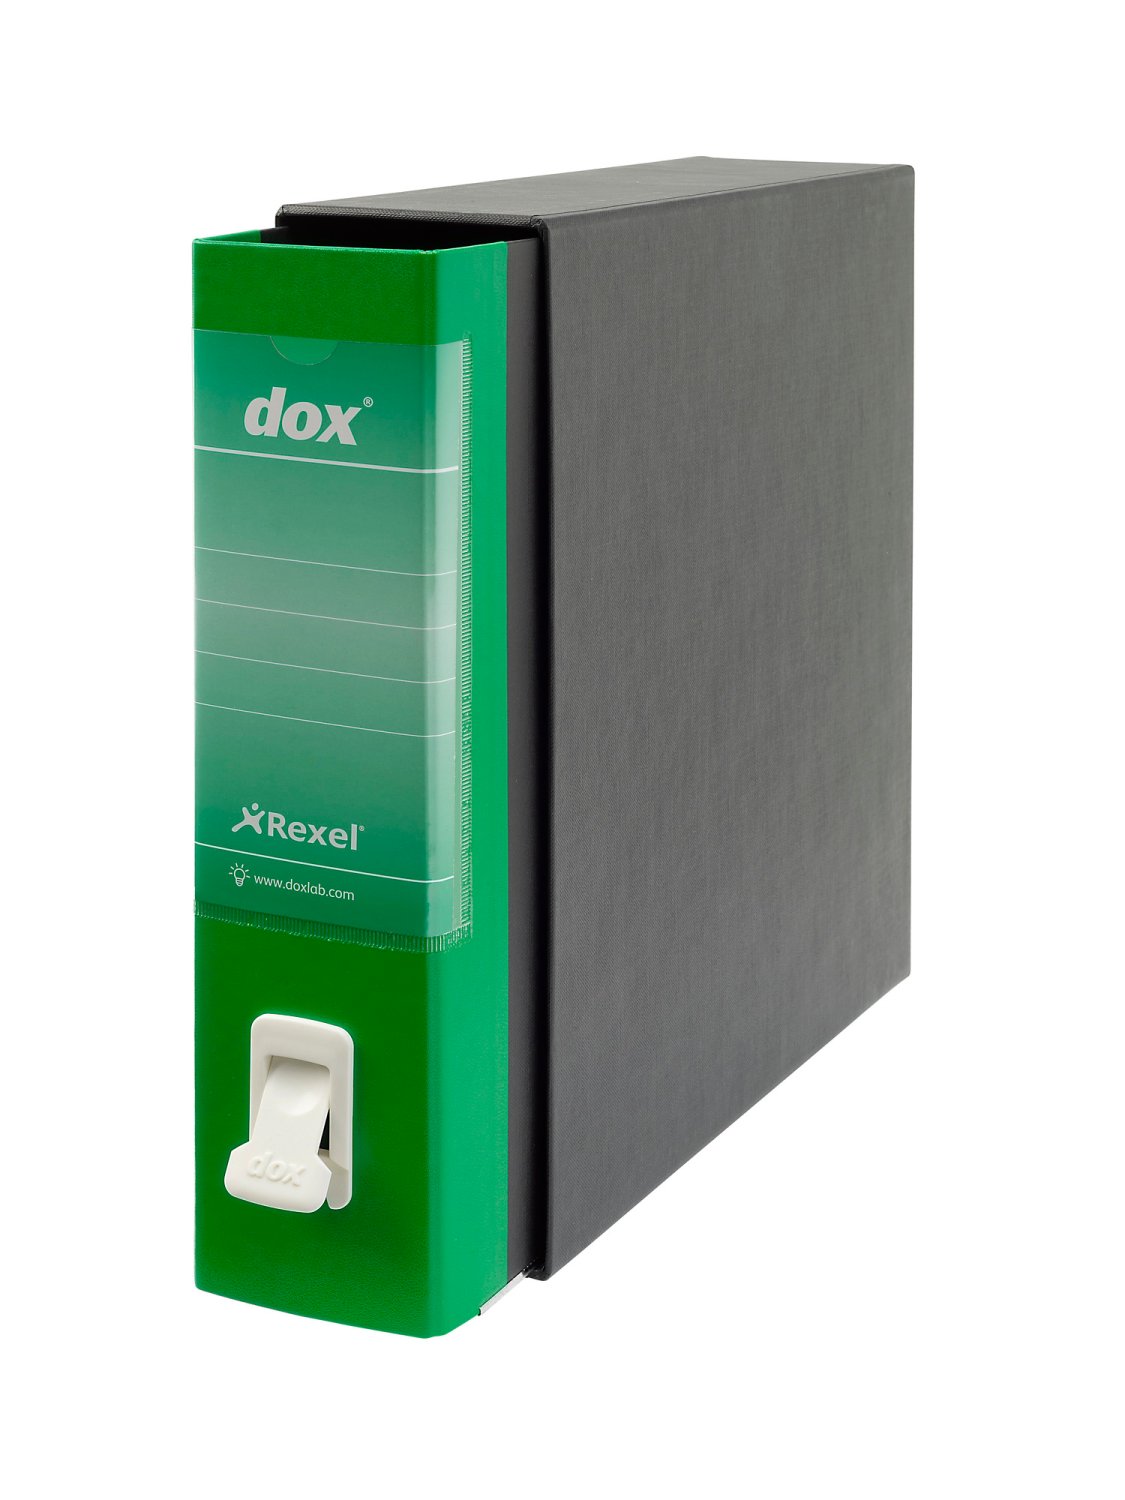 Registratore New Dox 1 Verde Dorso 8cm F To Commerciale Esselte D26114 8004389087234